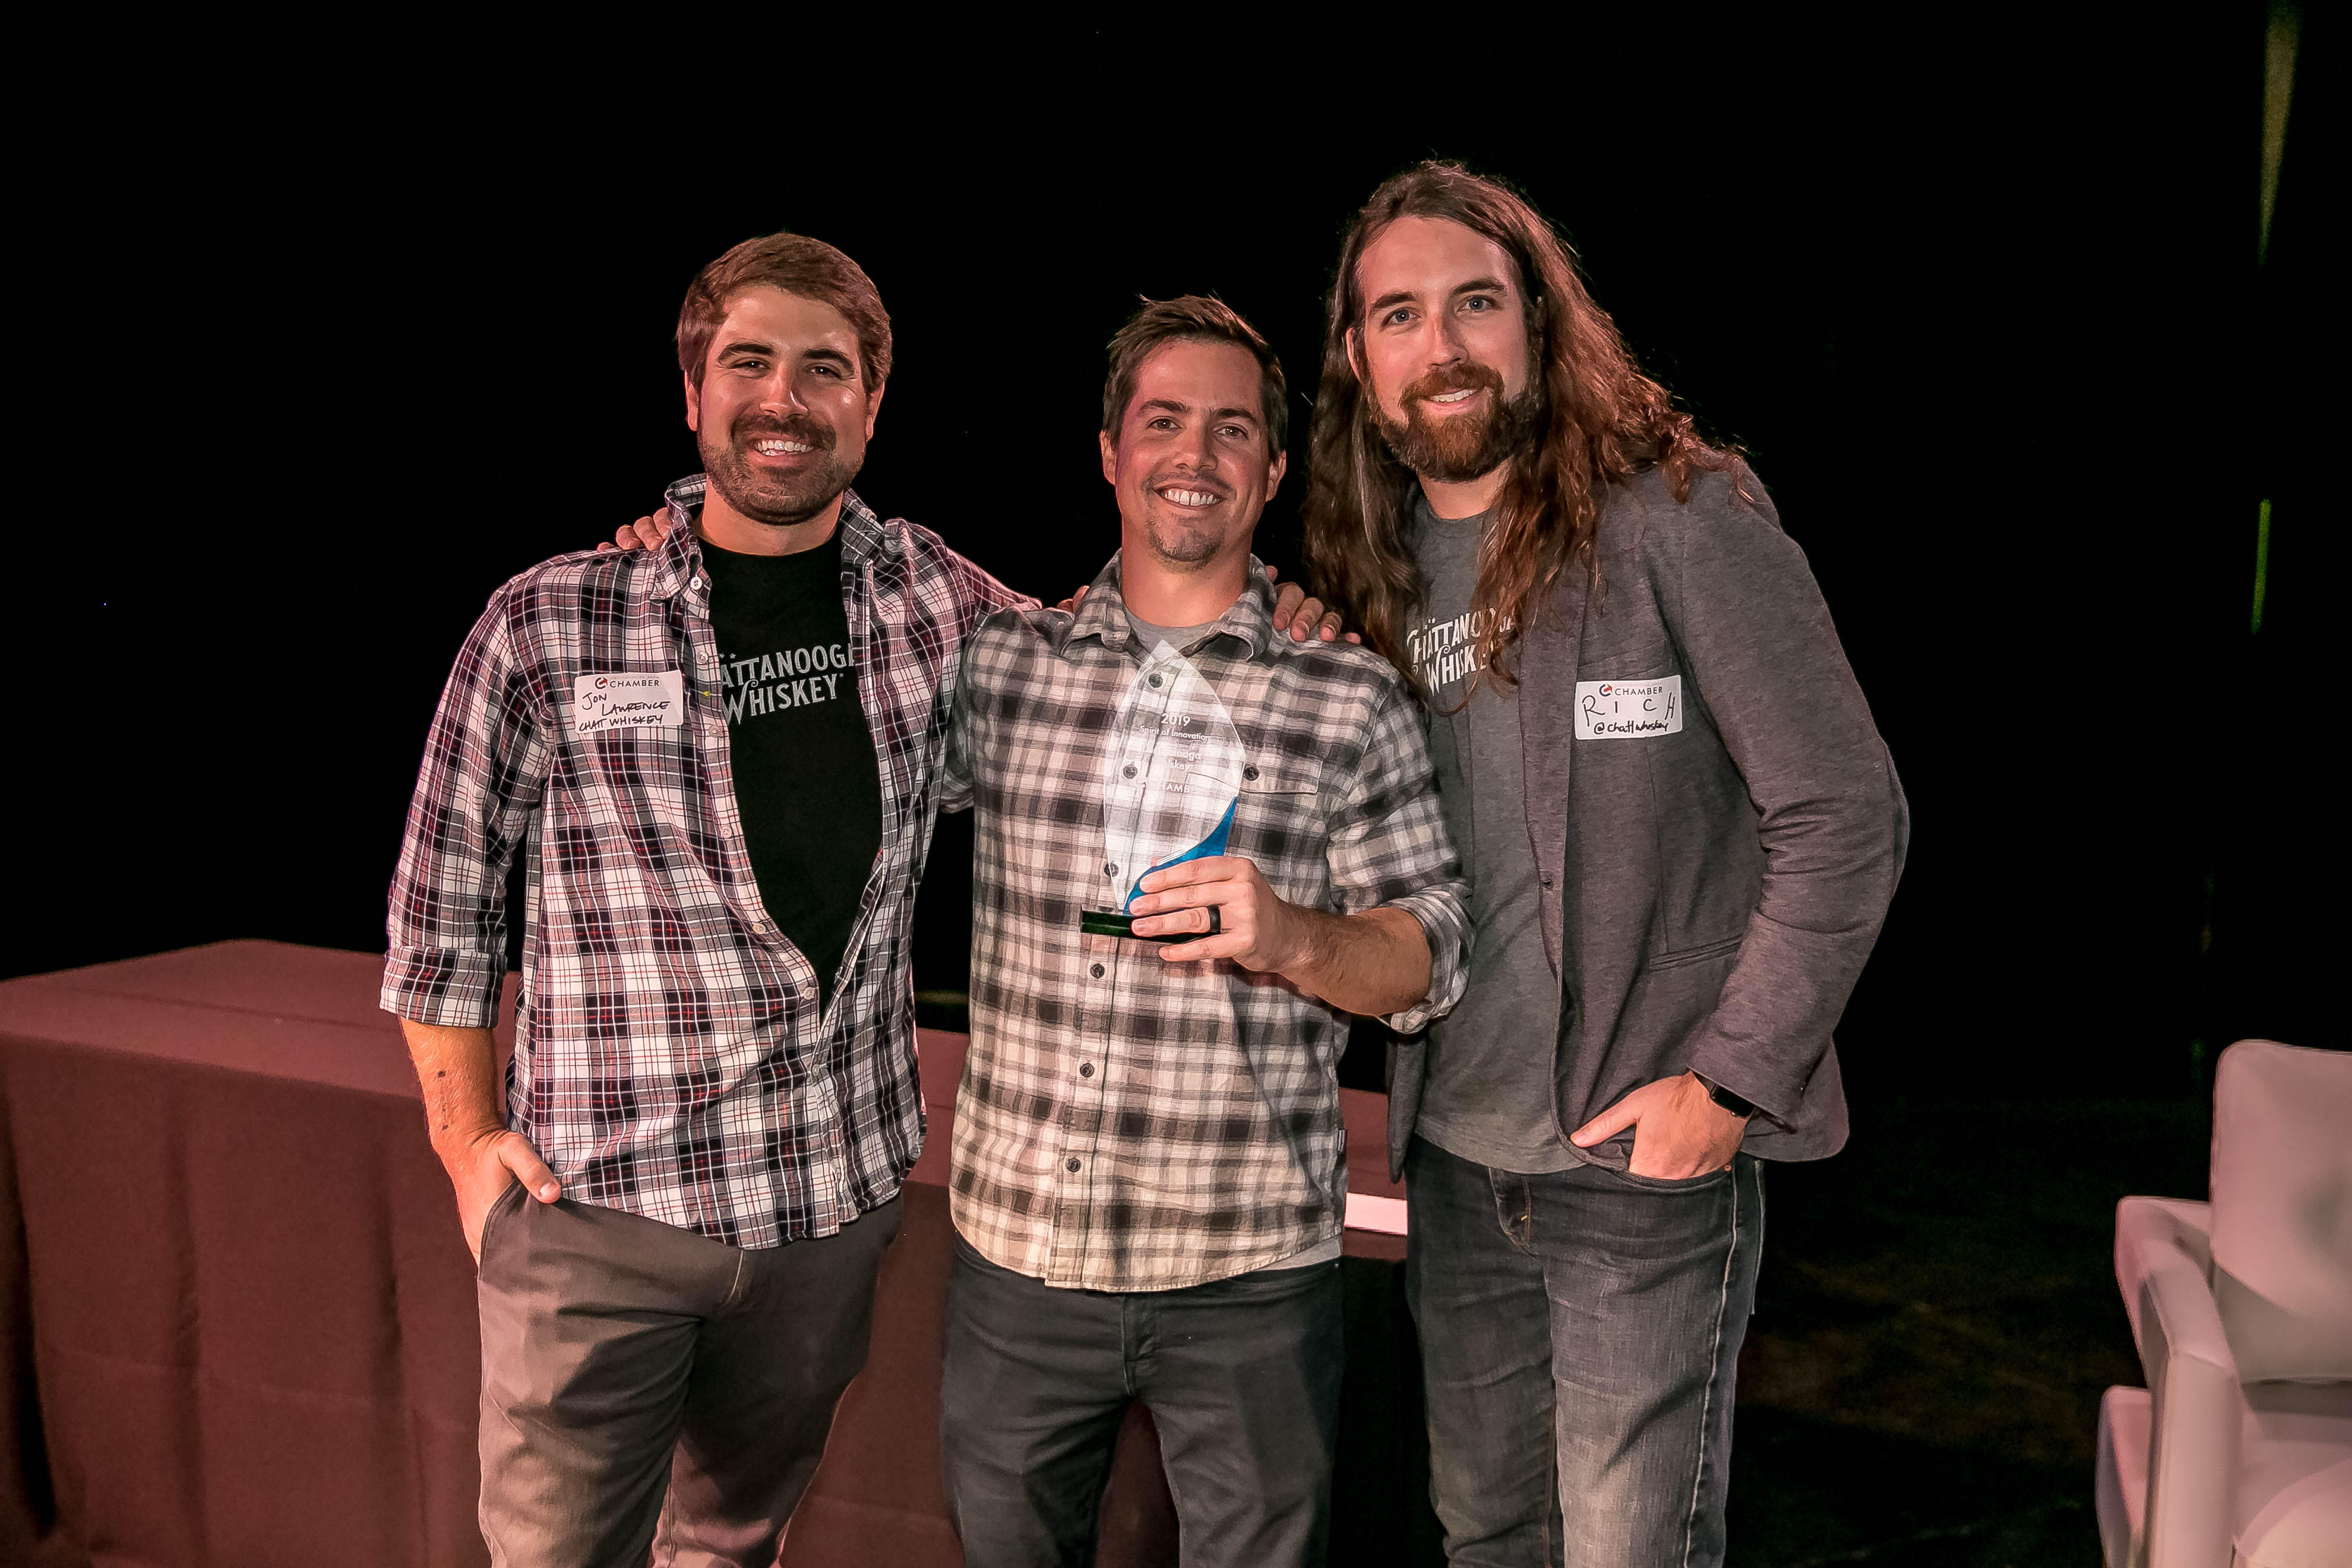 Chattanooga Whiskey Wins 2019 Spirit of Innovation Award